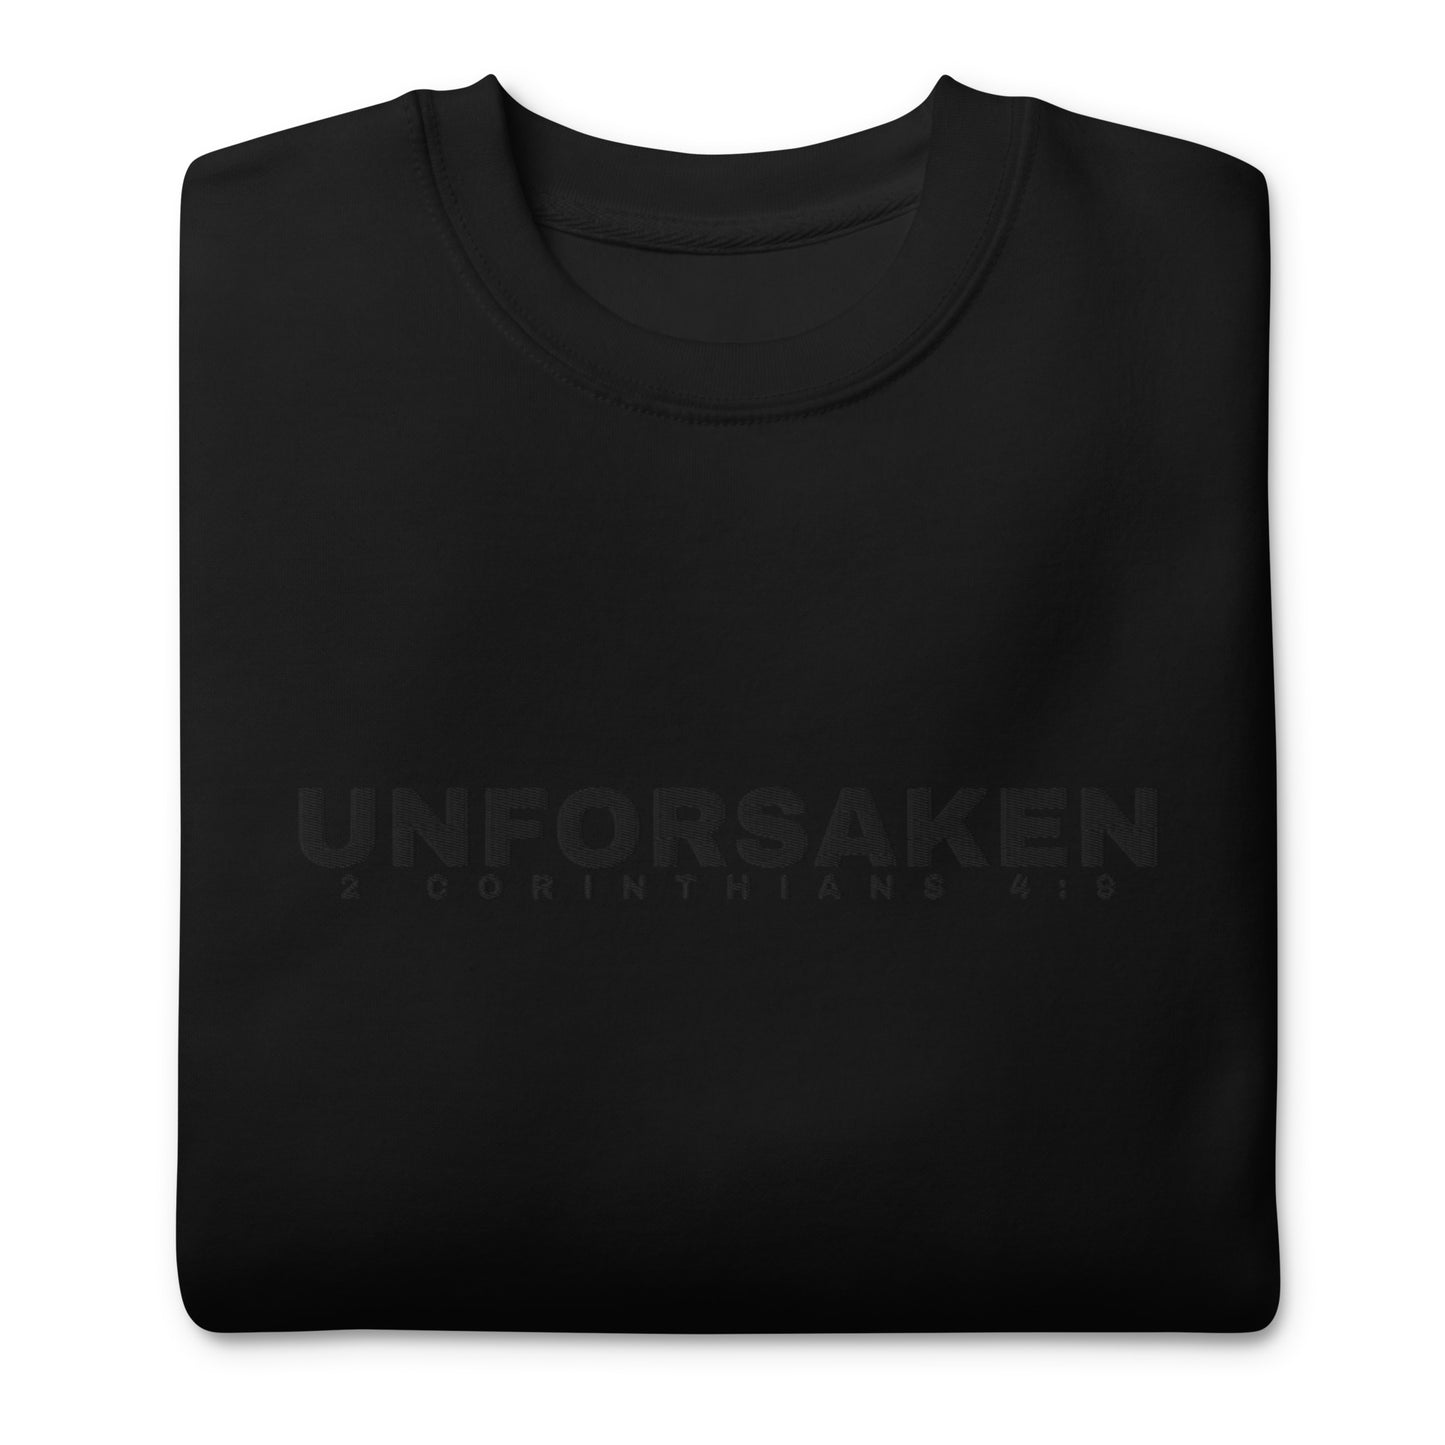 UNFORSAKEN 019 [BLACK ON BLACK] Embroidered Training Crewneck